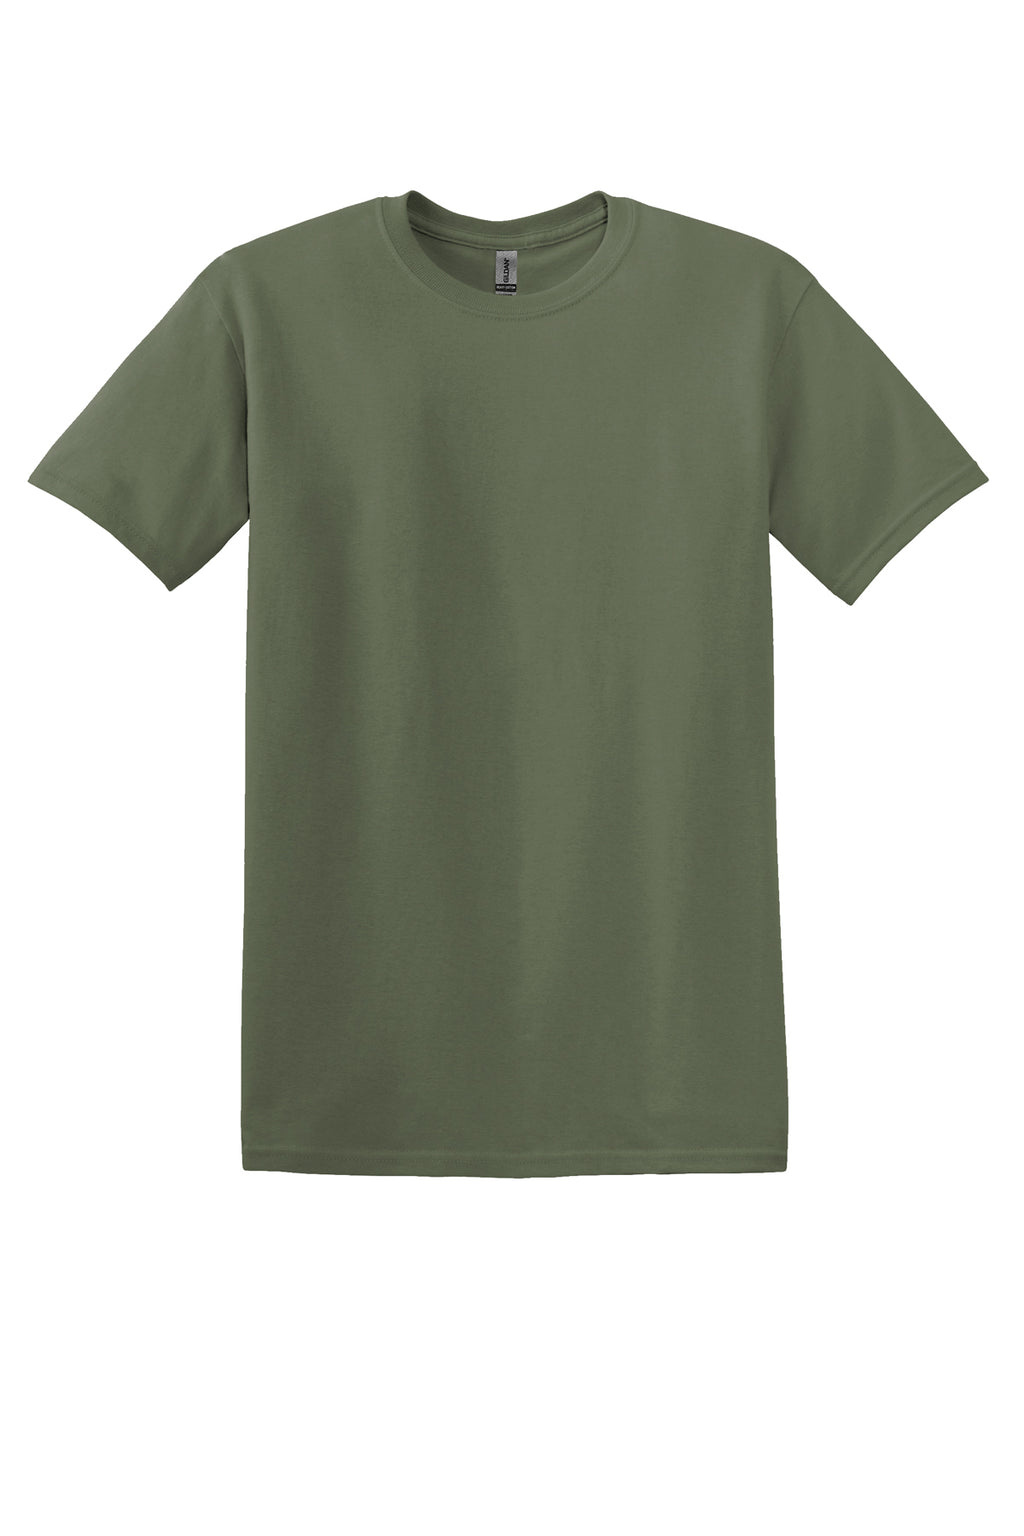 Gildan Mens/Unisex S/S Shirts Military Green